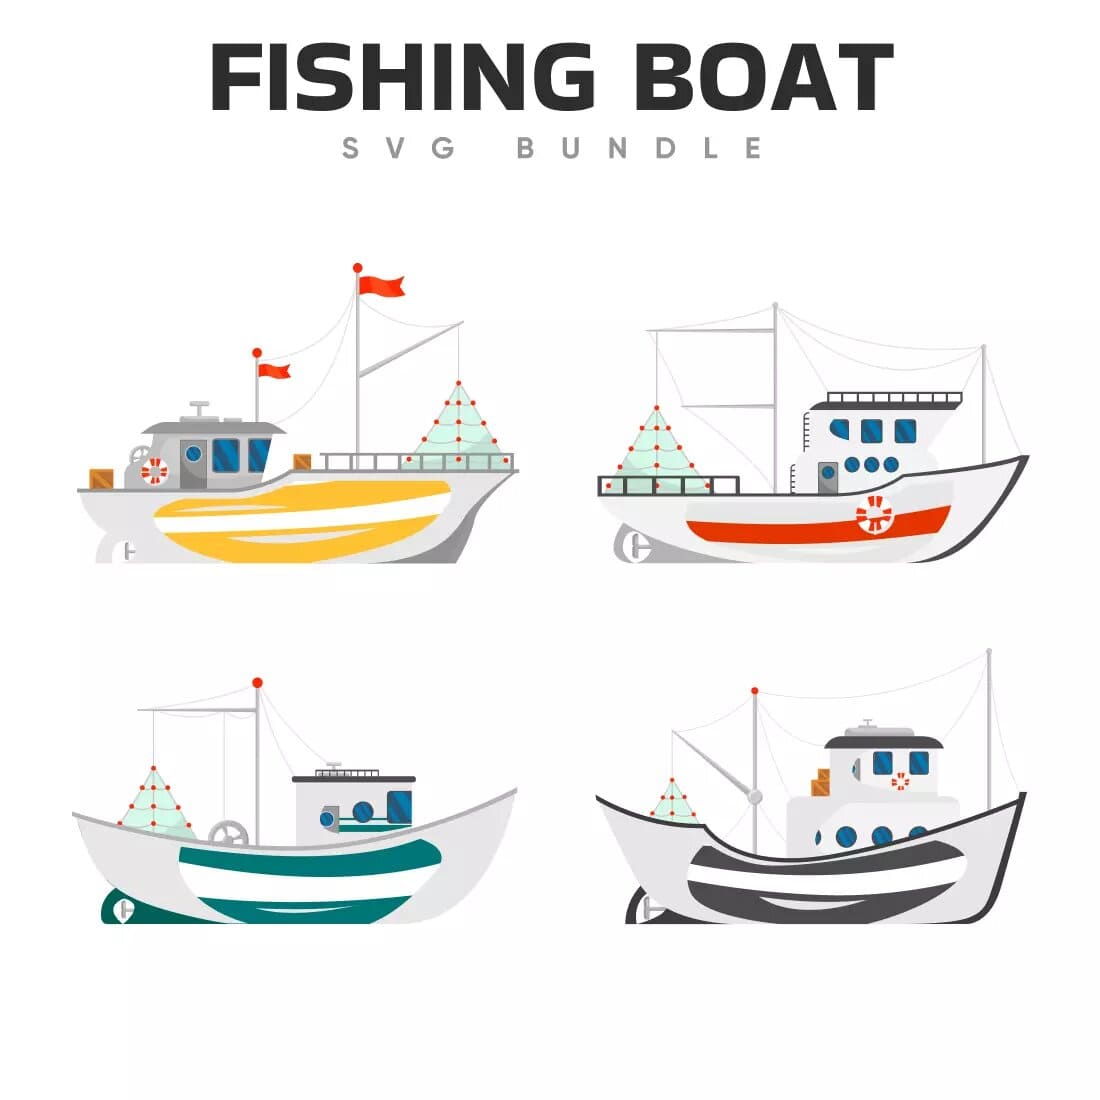 Fishing Boat SVG Bundle Preview 8.